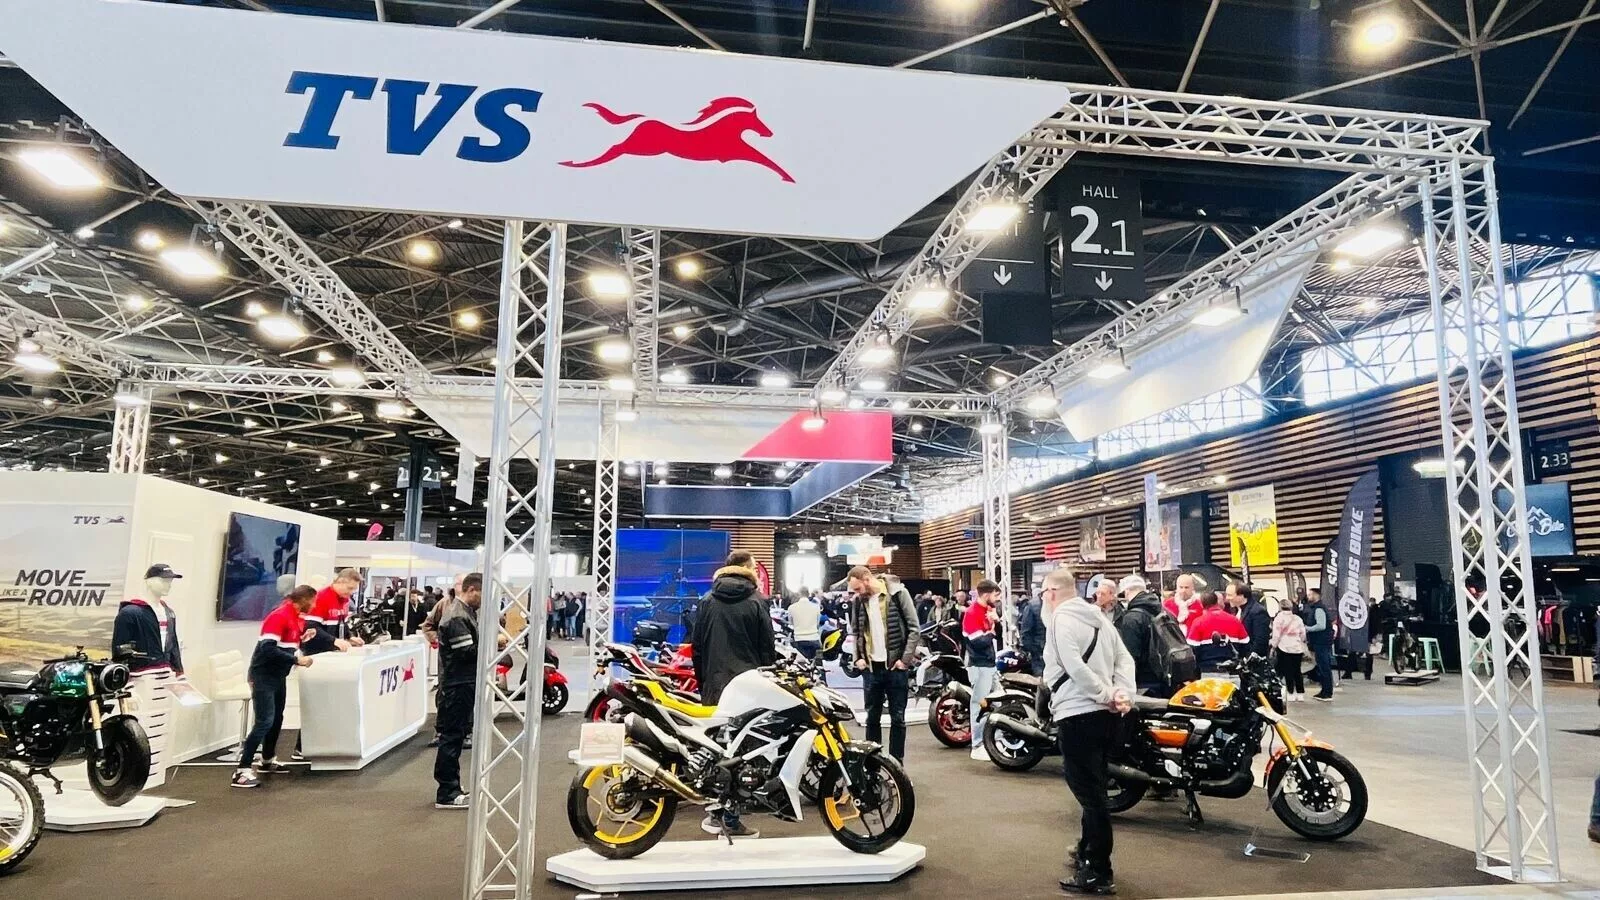 TVS Motor Co enters France, displays its product range at Salon du Deux Roues